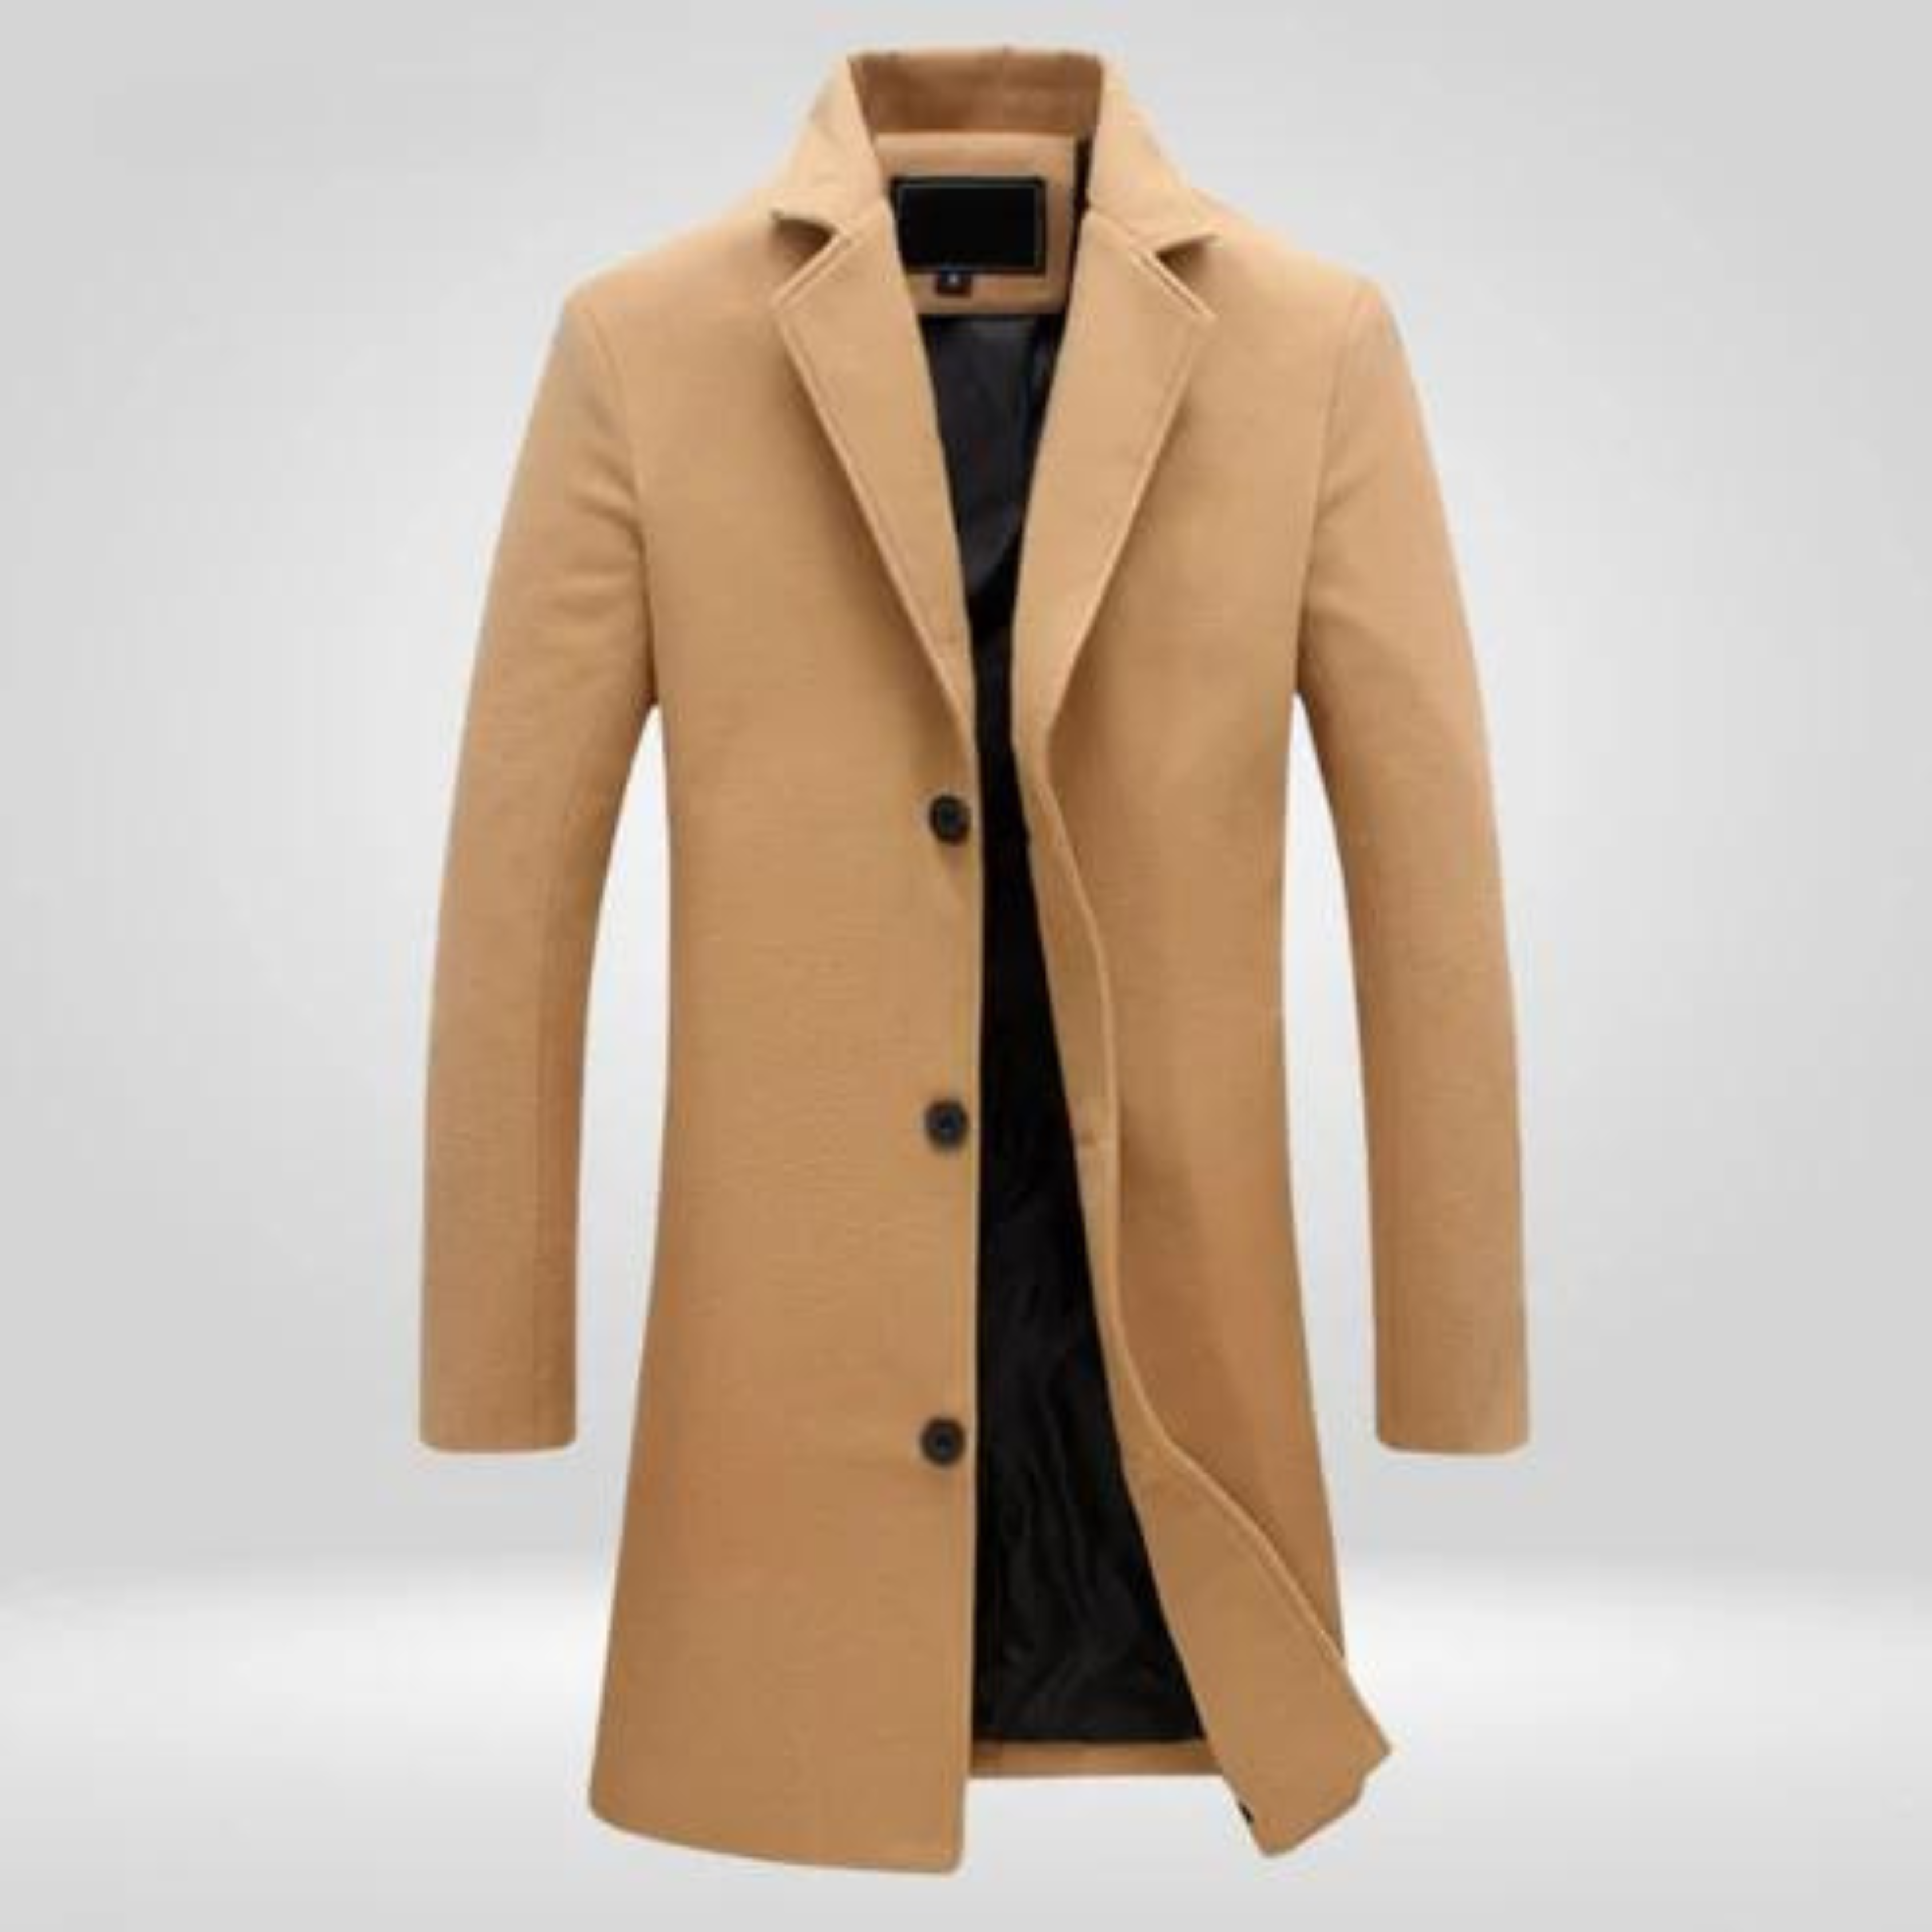 DAWSON™ - Sophisticated Winter Coat